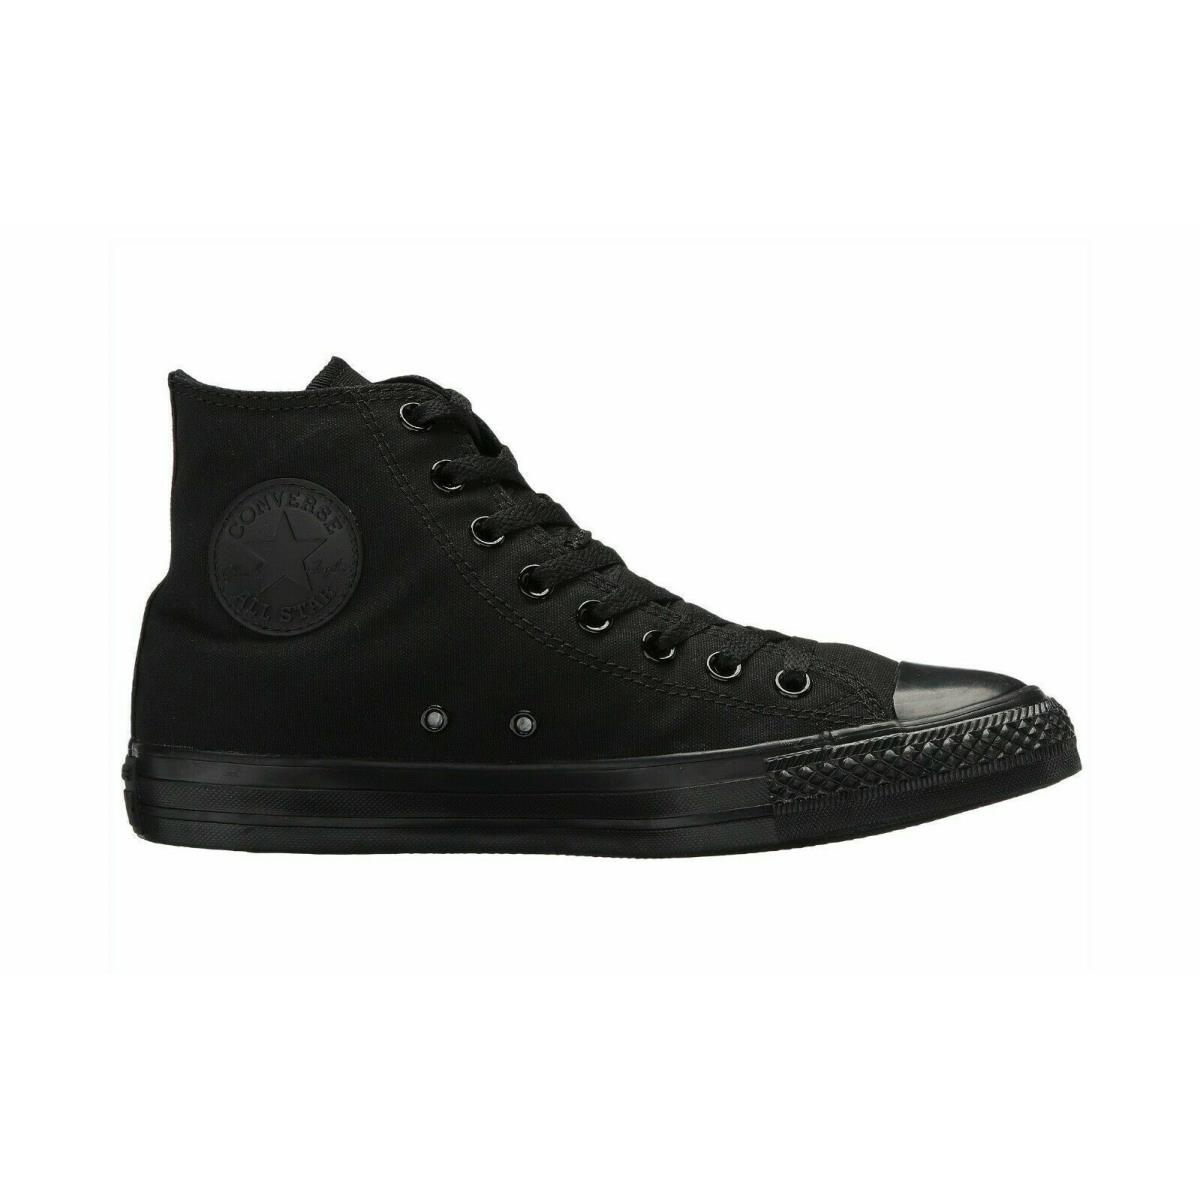 Converse All Star Chuck Taylor High Women Shoes Black Mono Canvas Sneakers - Black, Manufacturer: Black Mono